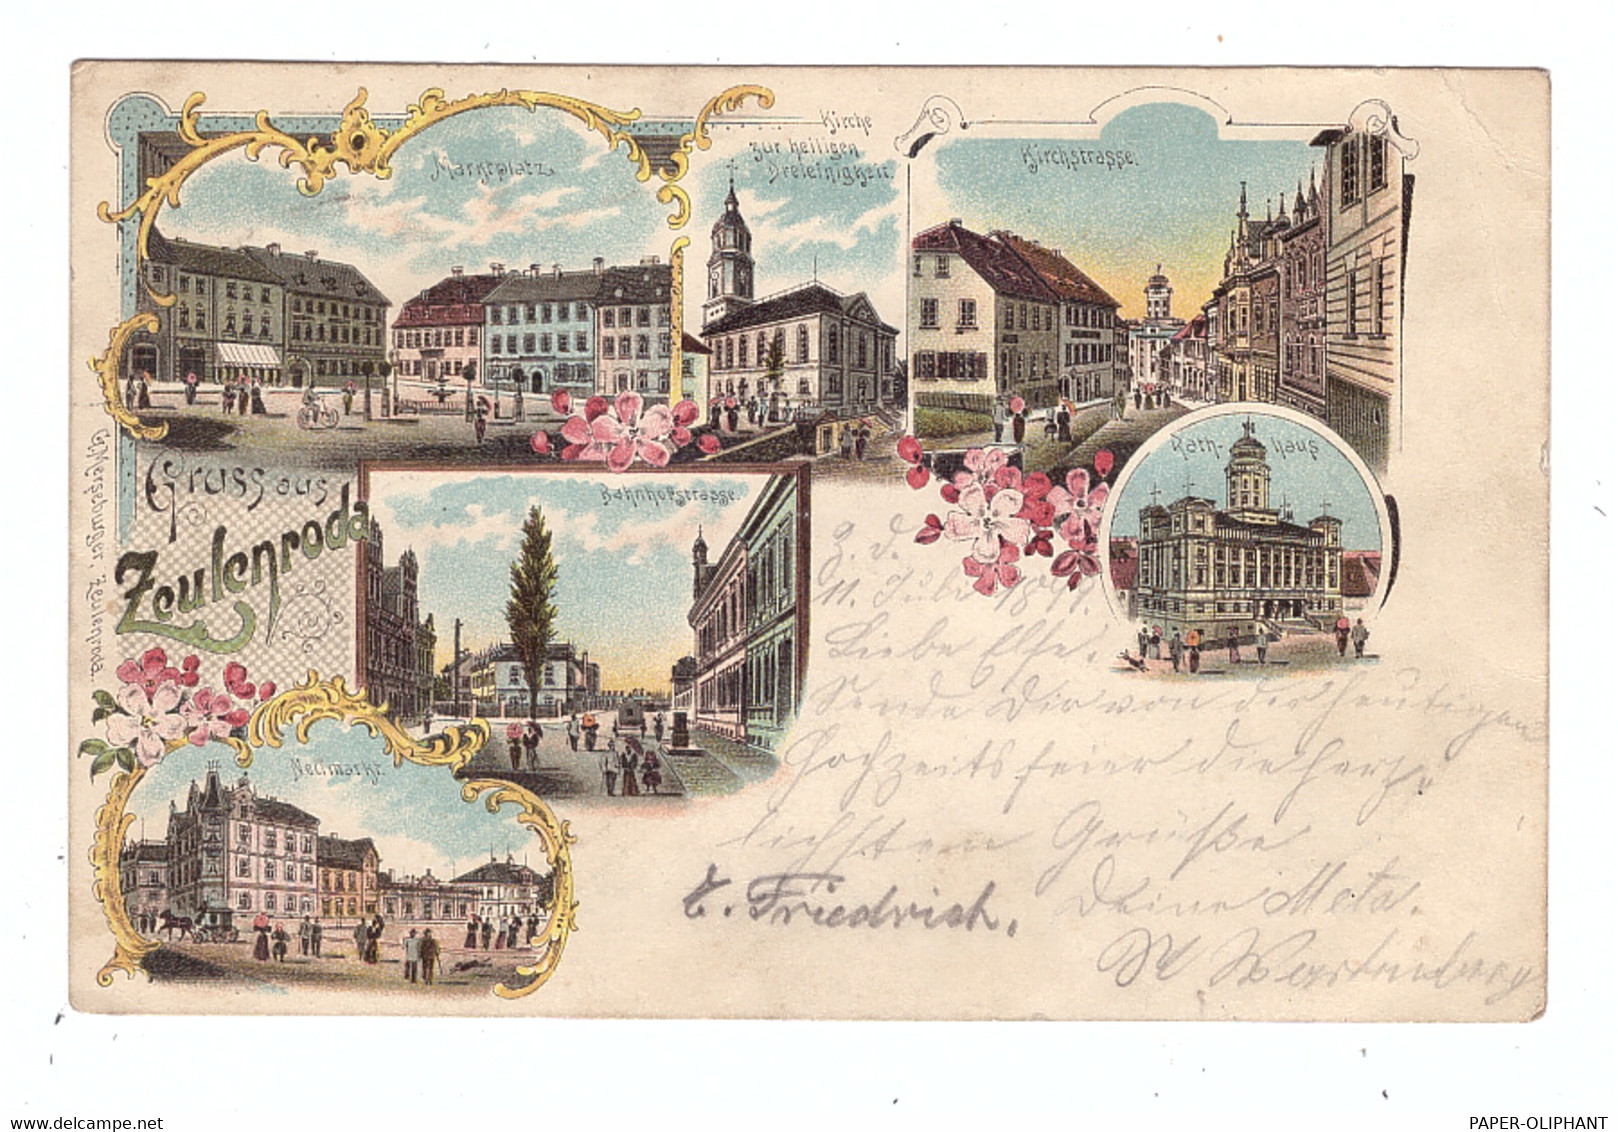 0-6570 ZEULENRODA, Lithographie 1899, Bahnhofstrasse, Kirchstrasse, Neumarkt... - Zeulenroda